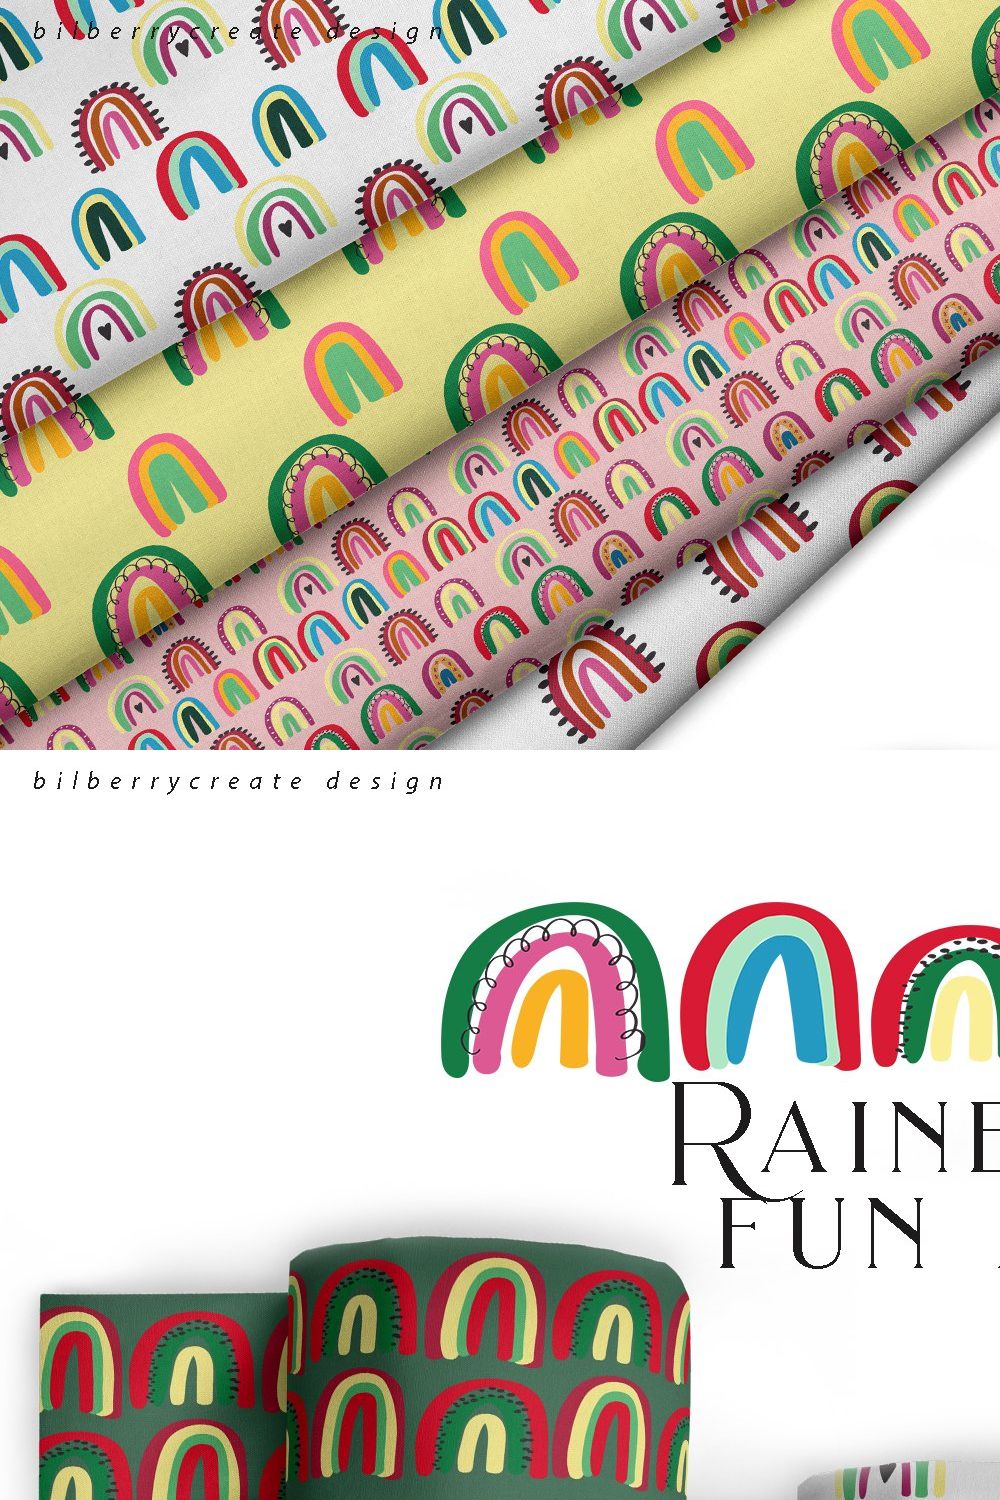 Rainbow Fun Art pinterest preview image.